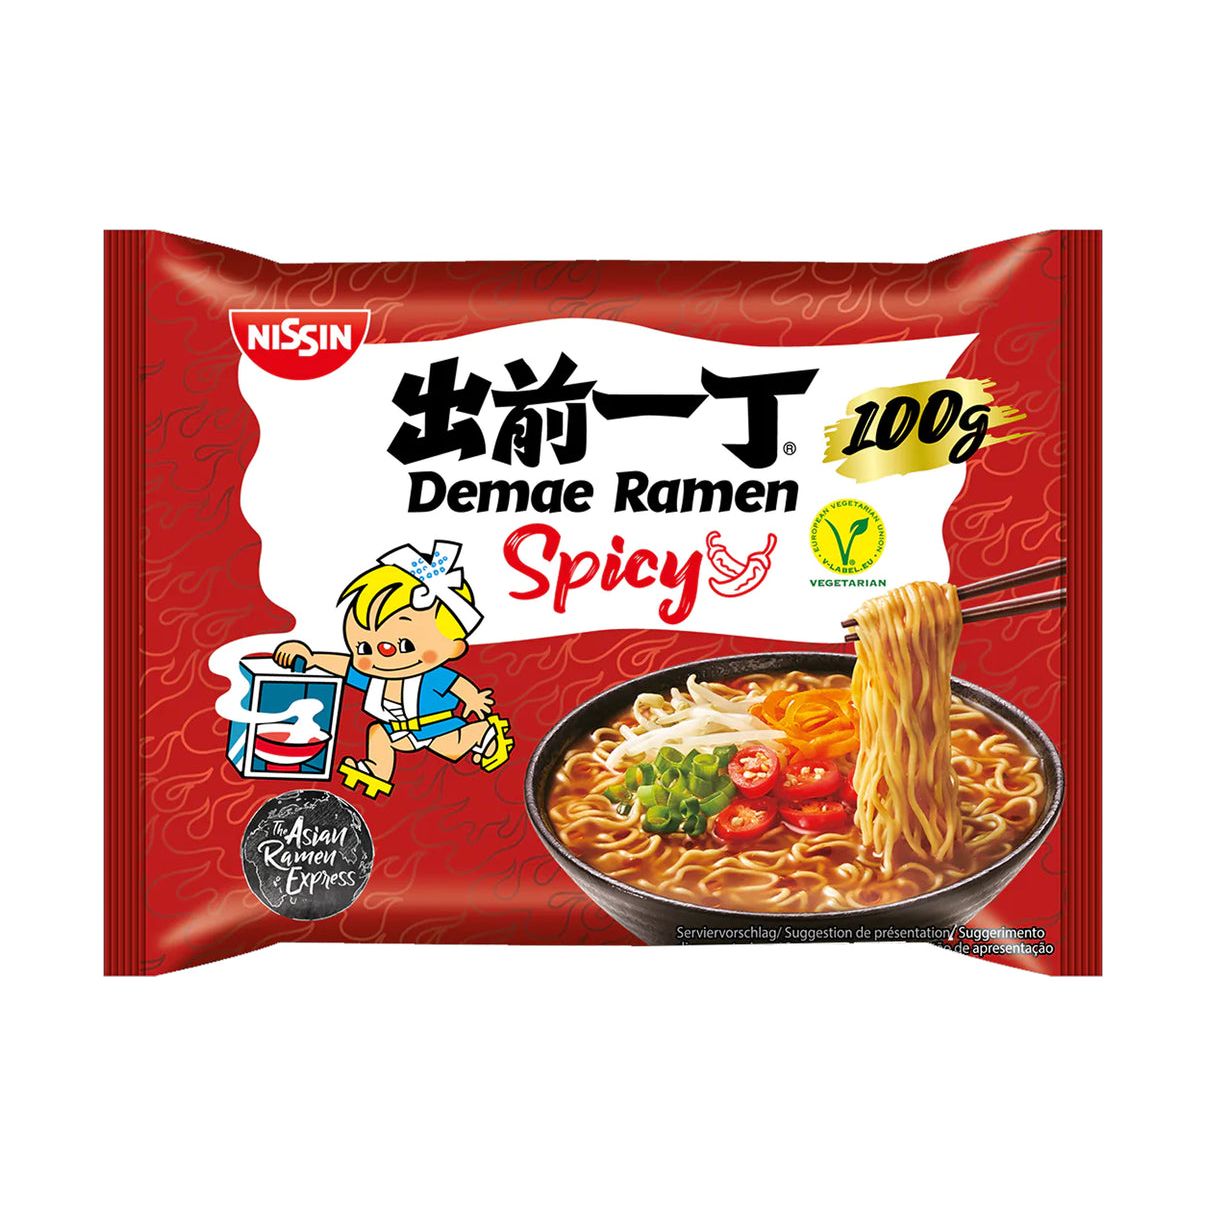 NISSIN Demae Ramen Noodle Spicy 100g